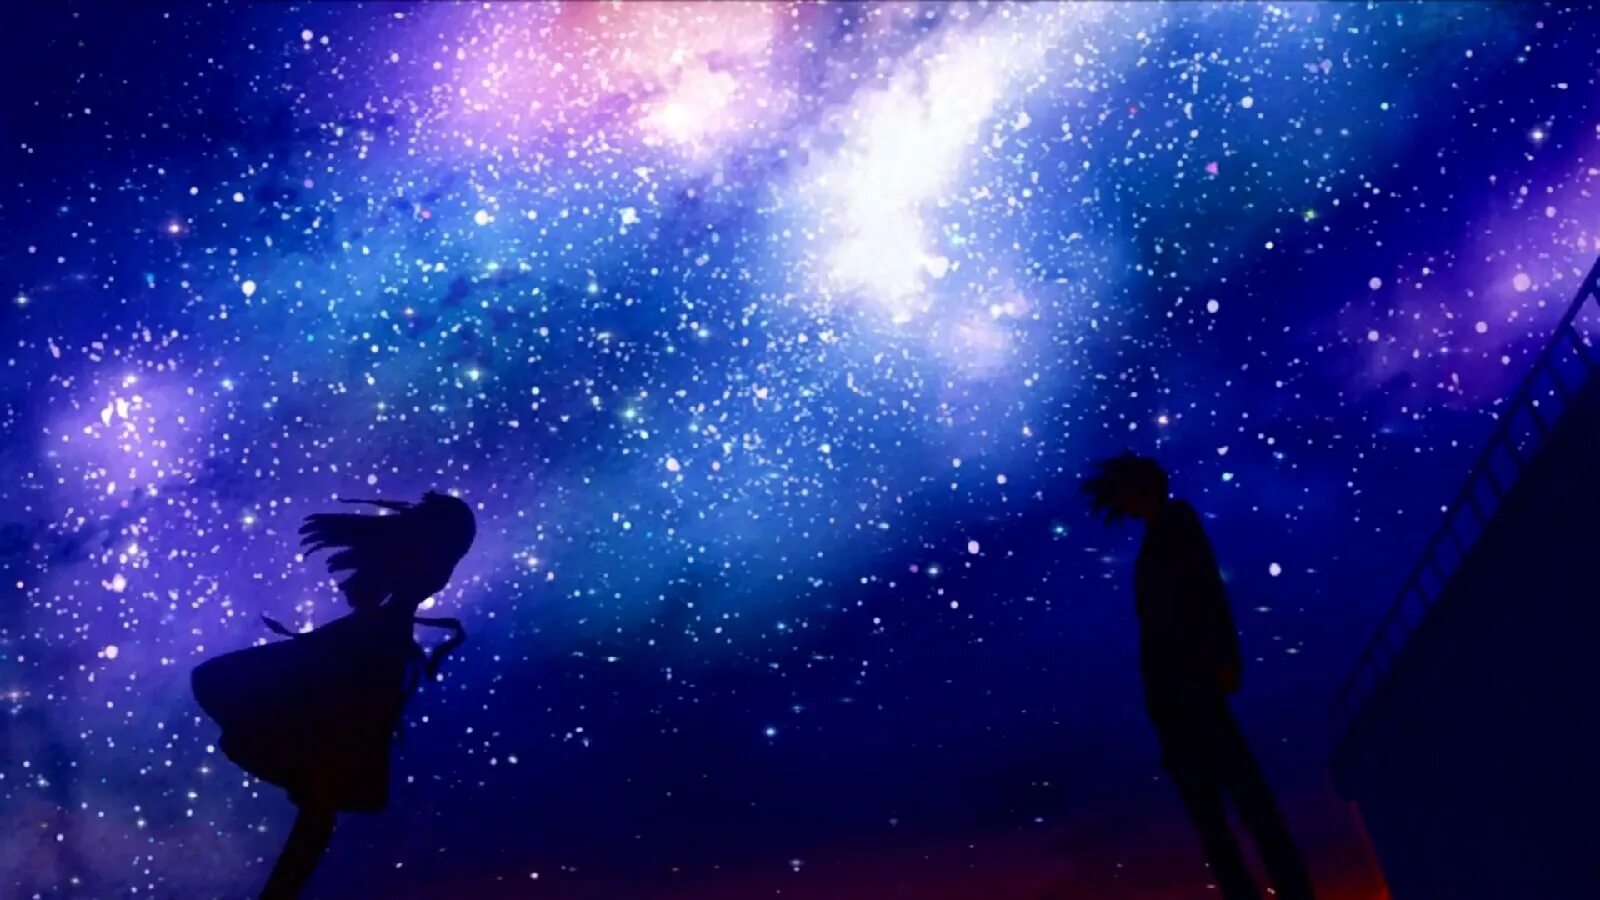 Ария смотрящего на звезды. Звездное небо. Девушка и звездное небо. Ночное звездное небо. Человек на фоне звездного неба.